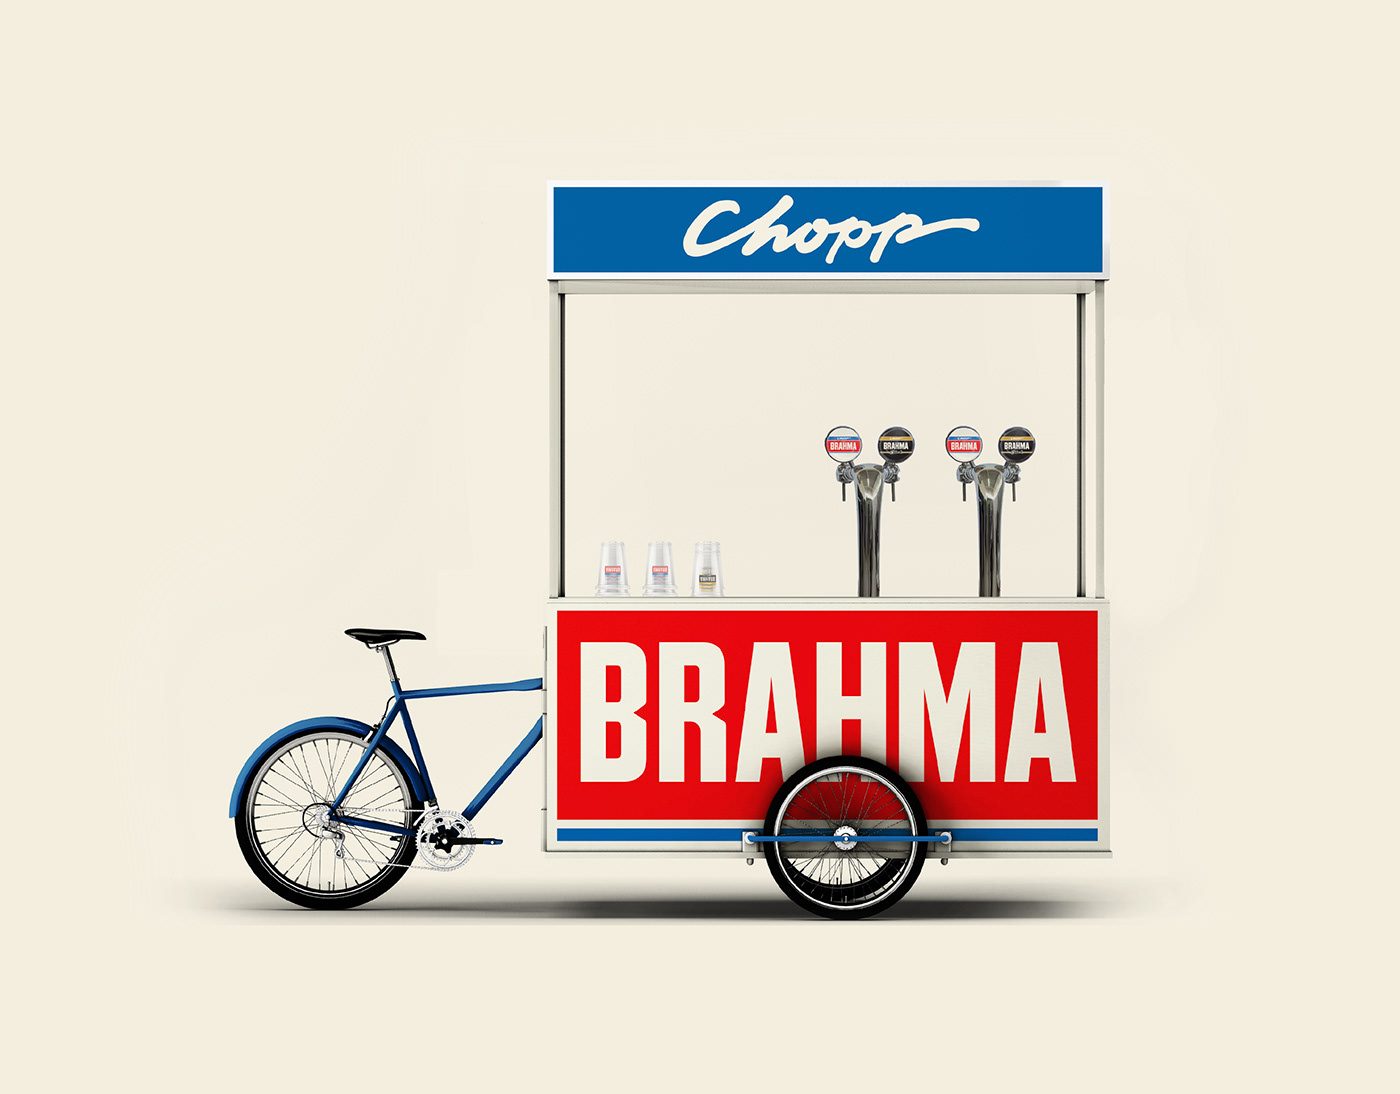 visual identity marca rebranding design system identidade visual brahma Chopp Brahma ambev